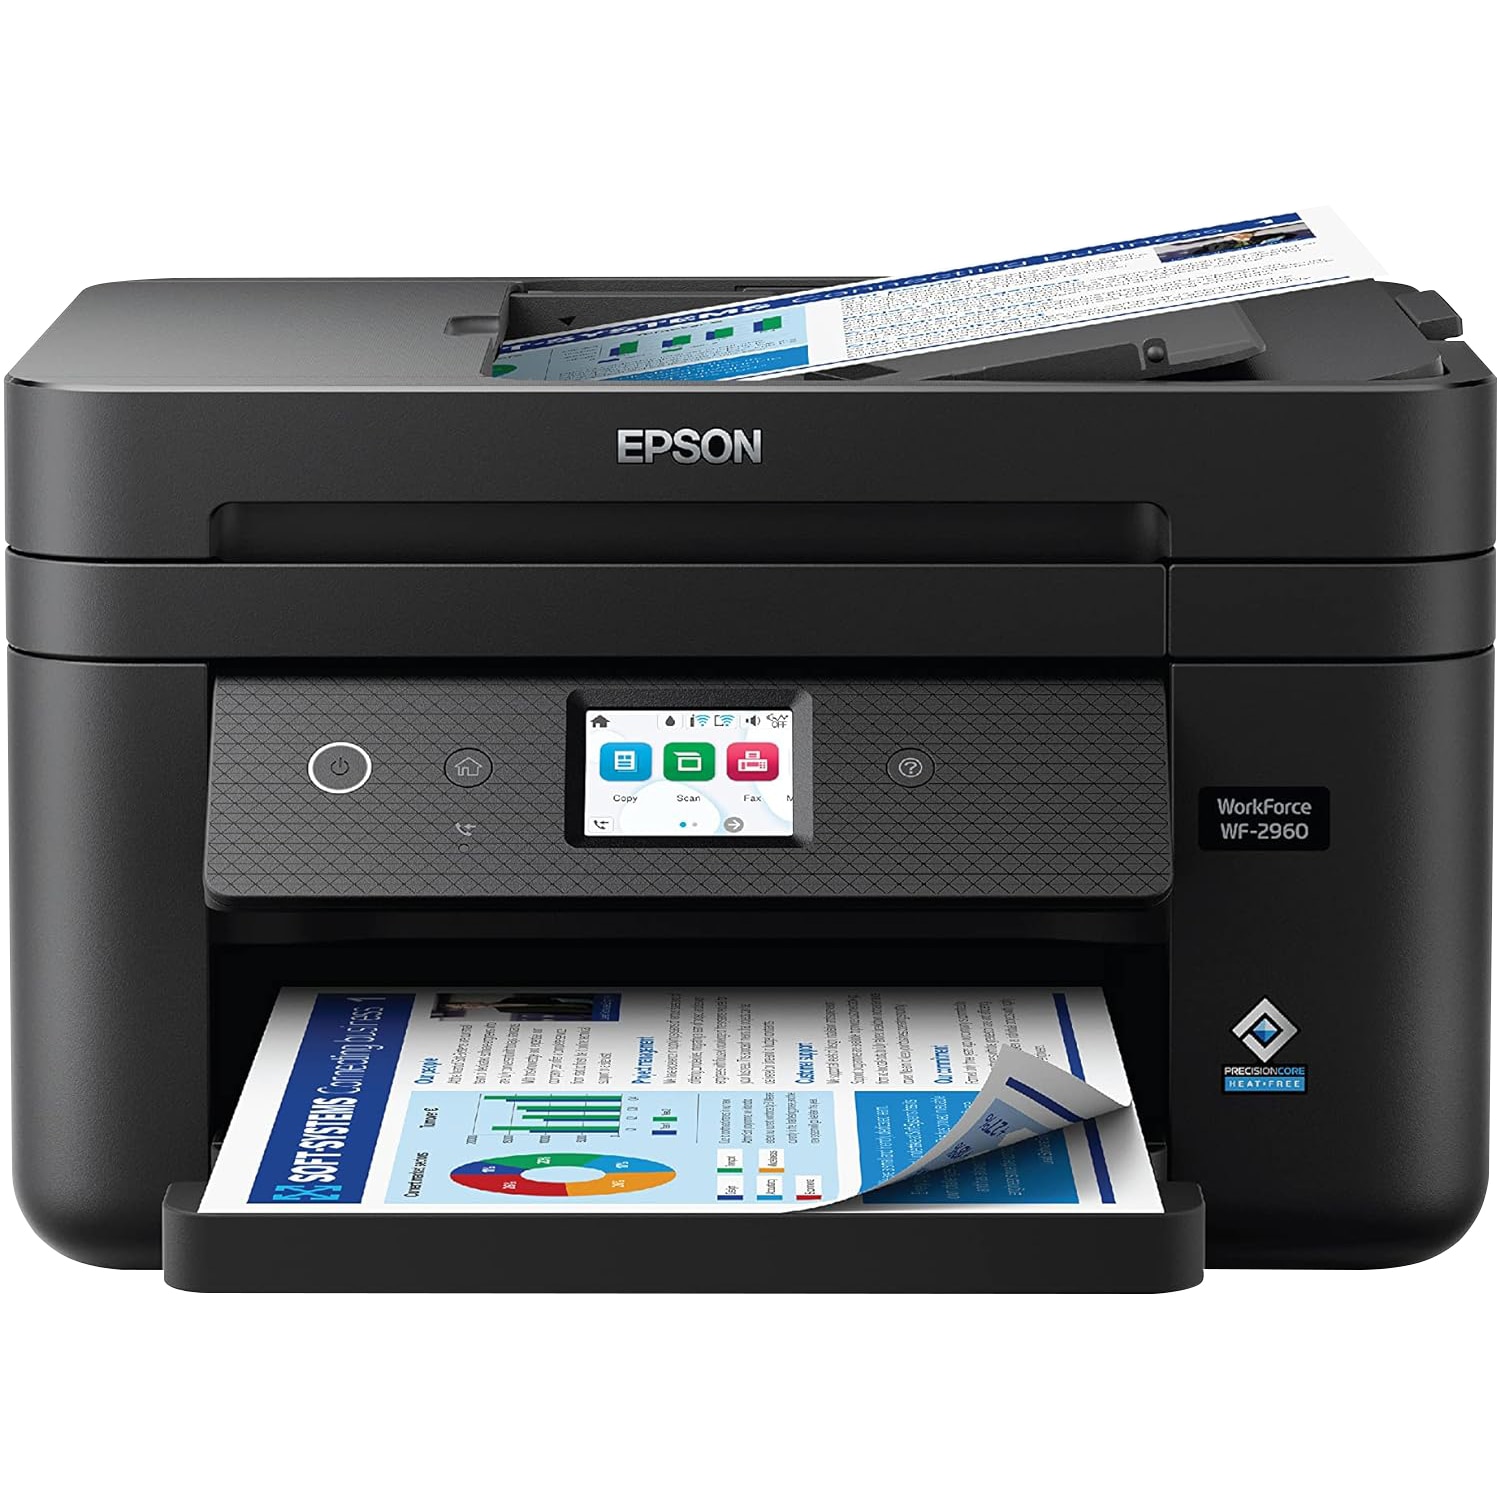 Epson WorkForce WF-2960 All-in-One Printer